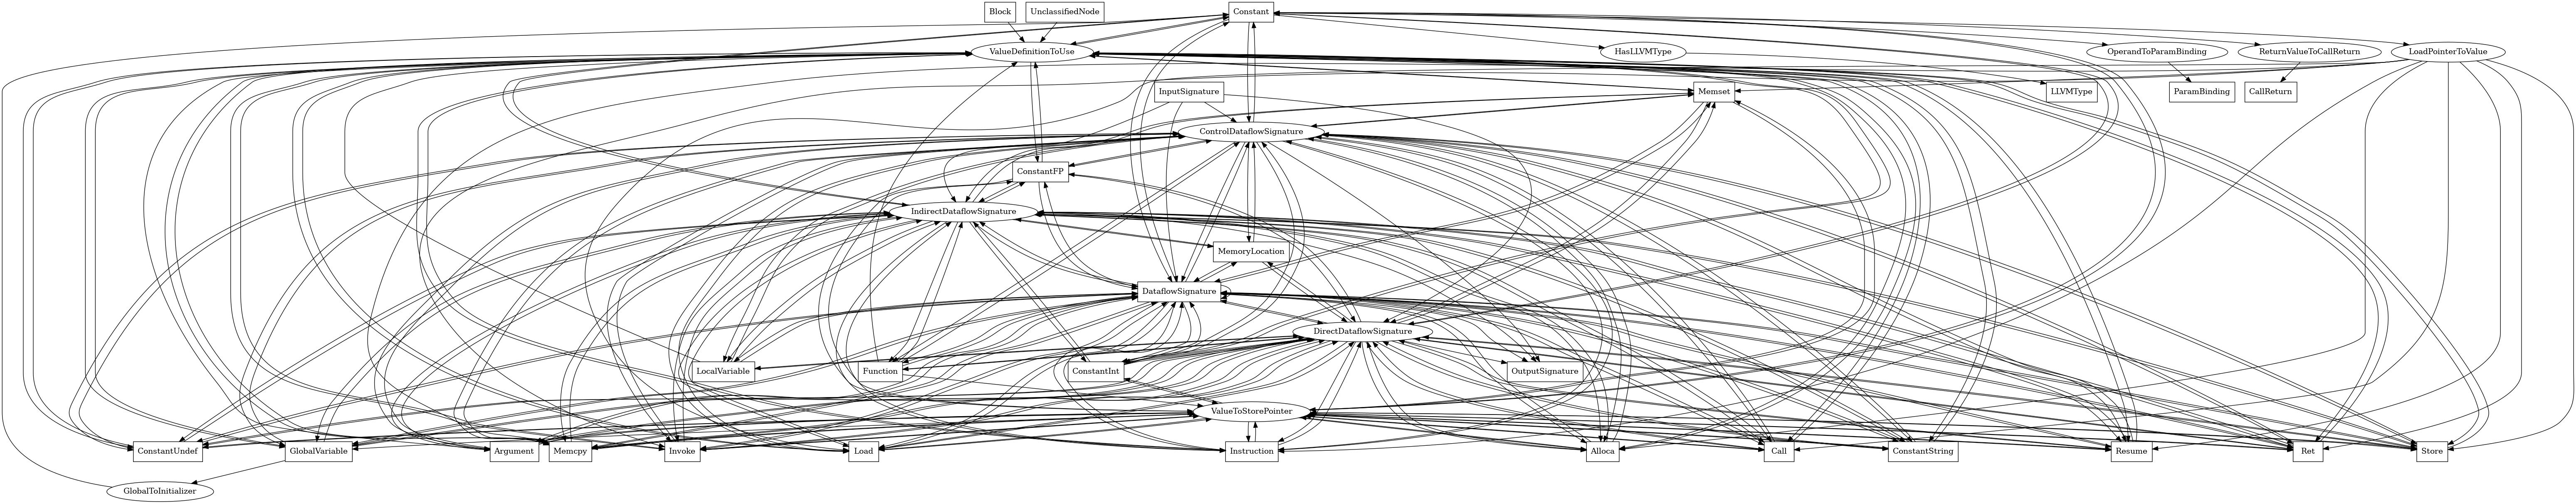 Entity-relationship diagram for Constant nodes